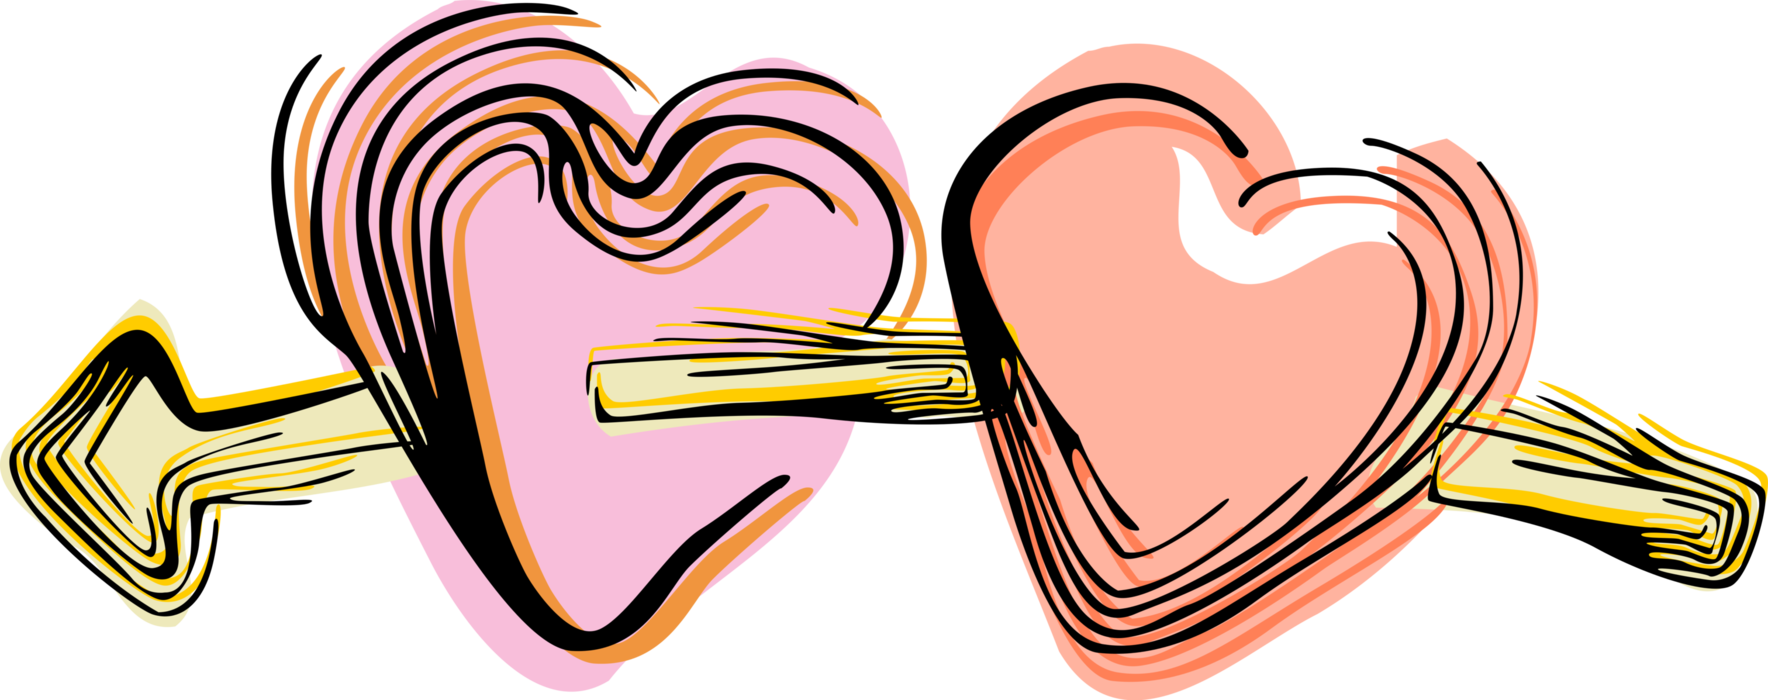 Vector Illustration of Cupid God of Desire and Erotic Love Arrow Pierces Romantic Love Hearts